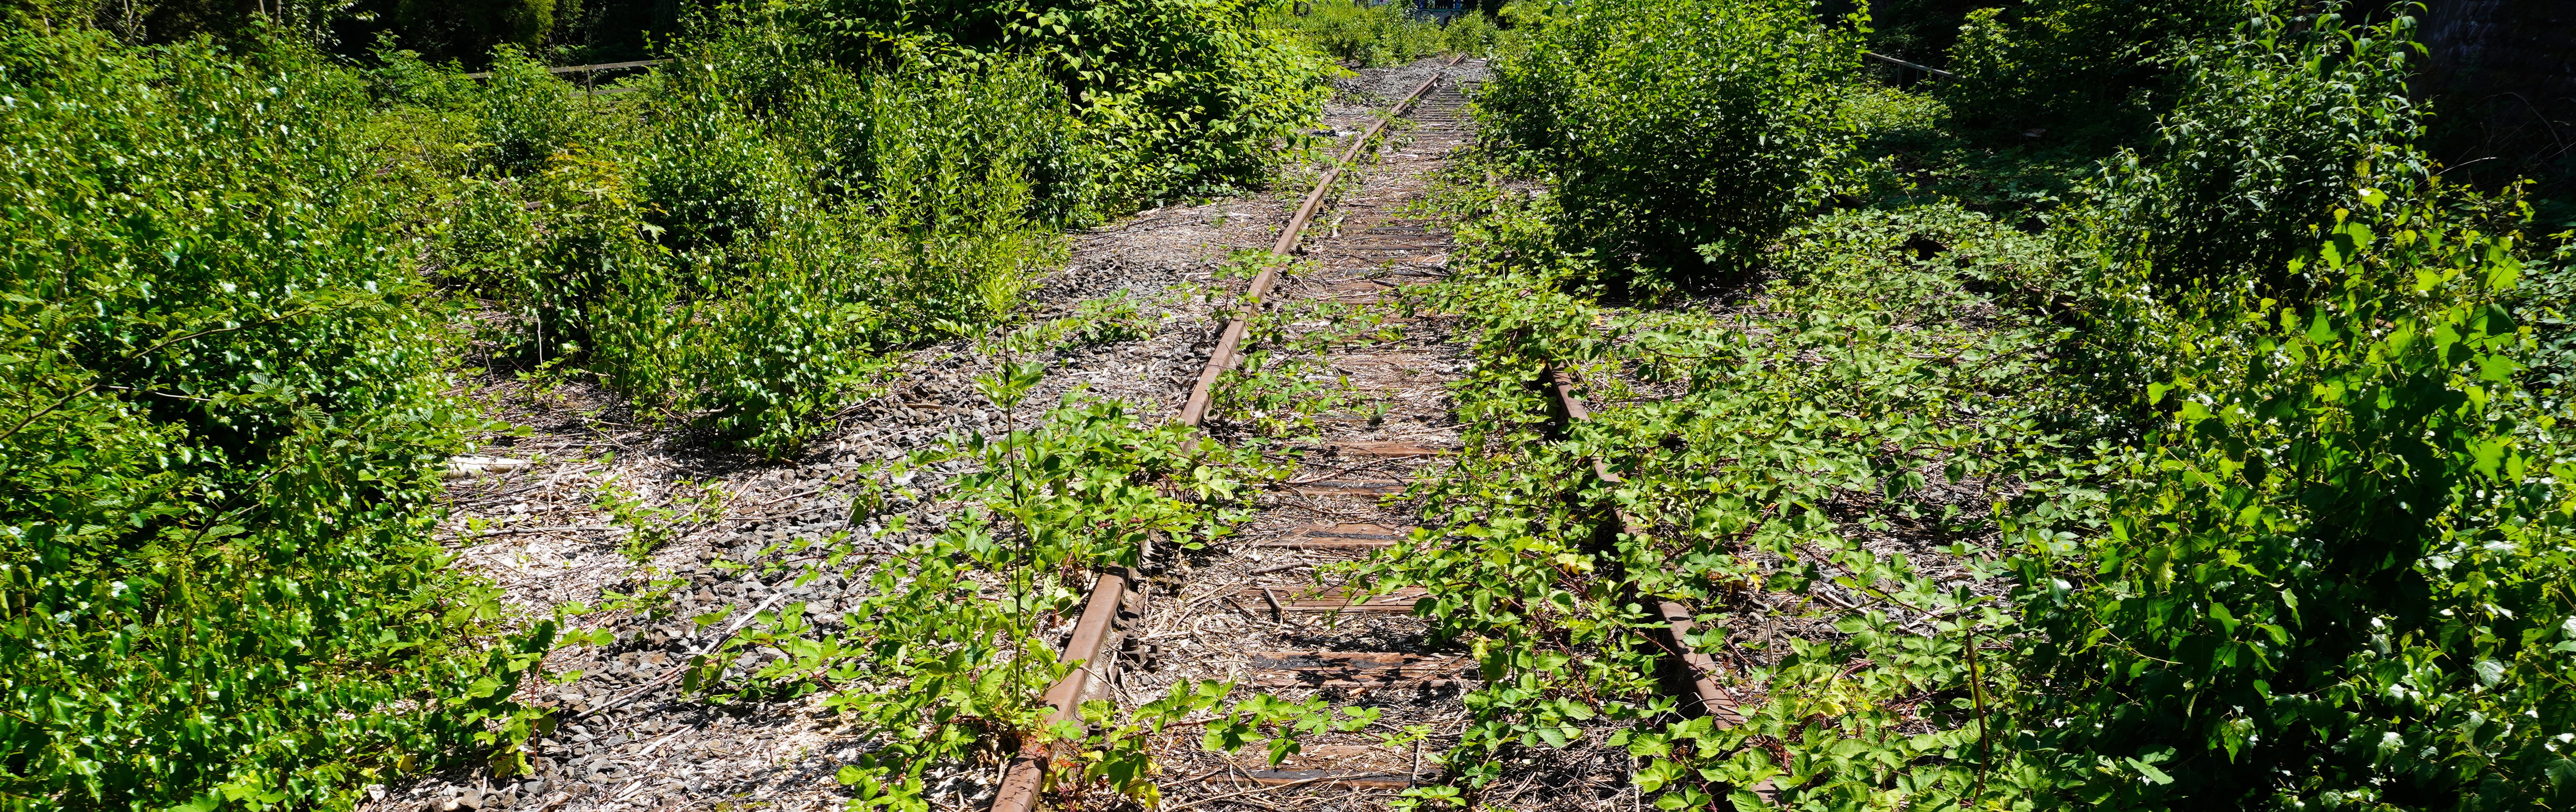 Disused railway tracks, overgrown by plants.